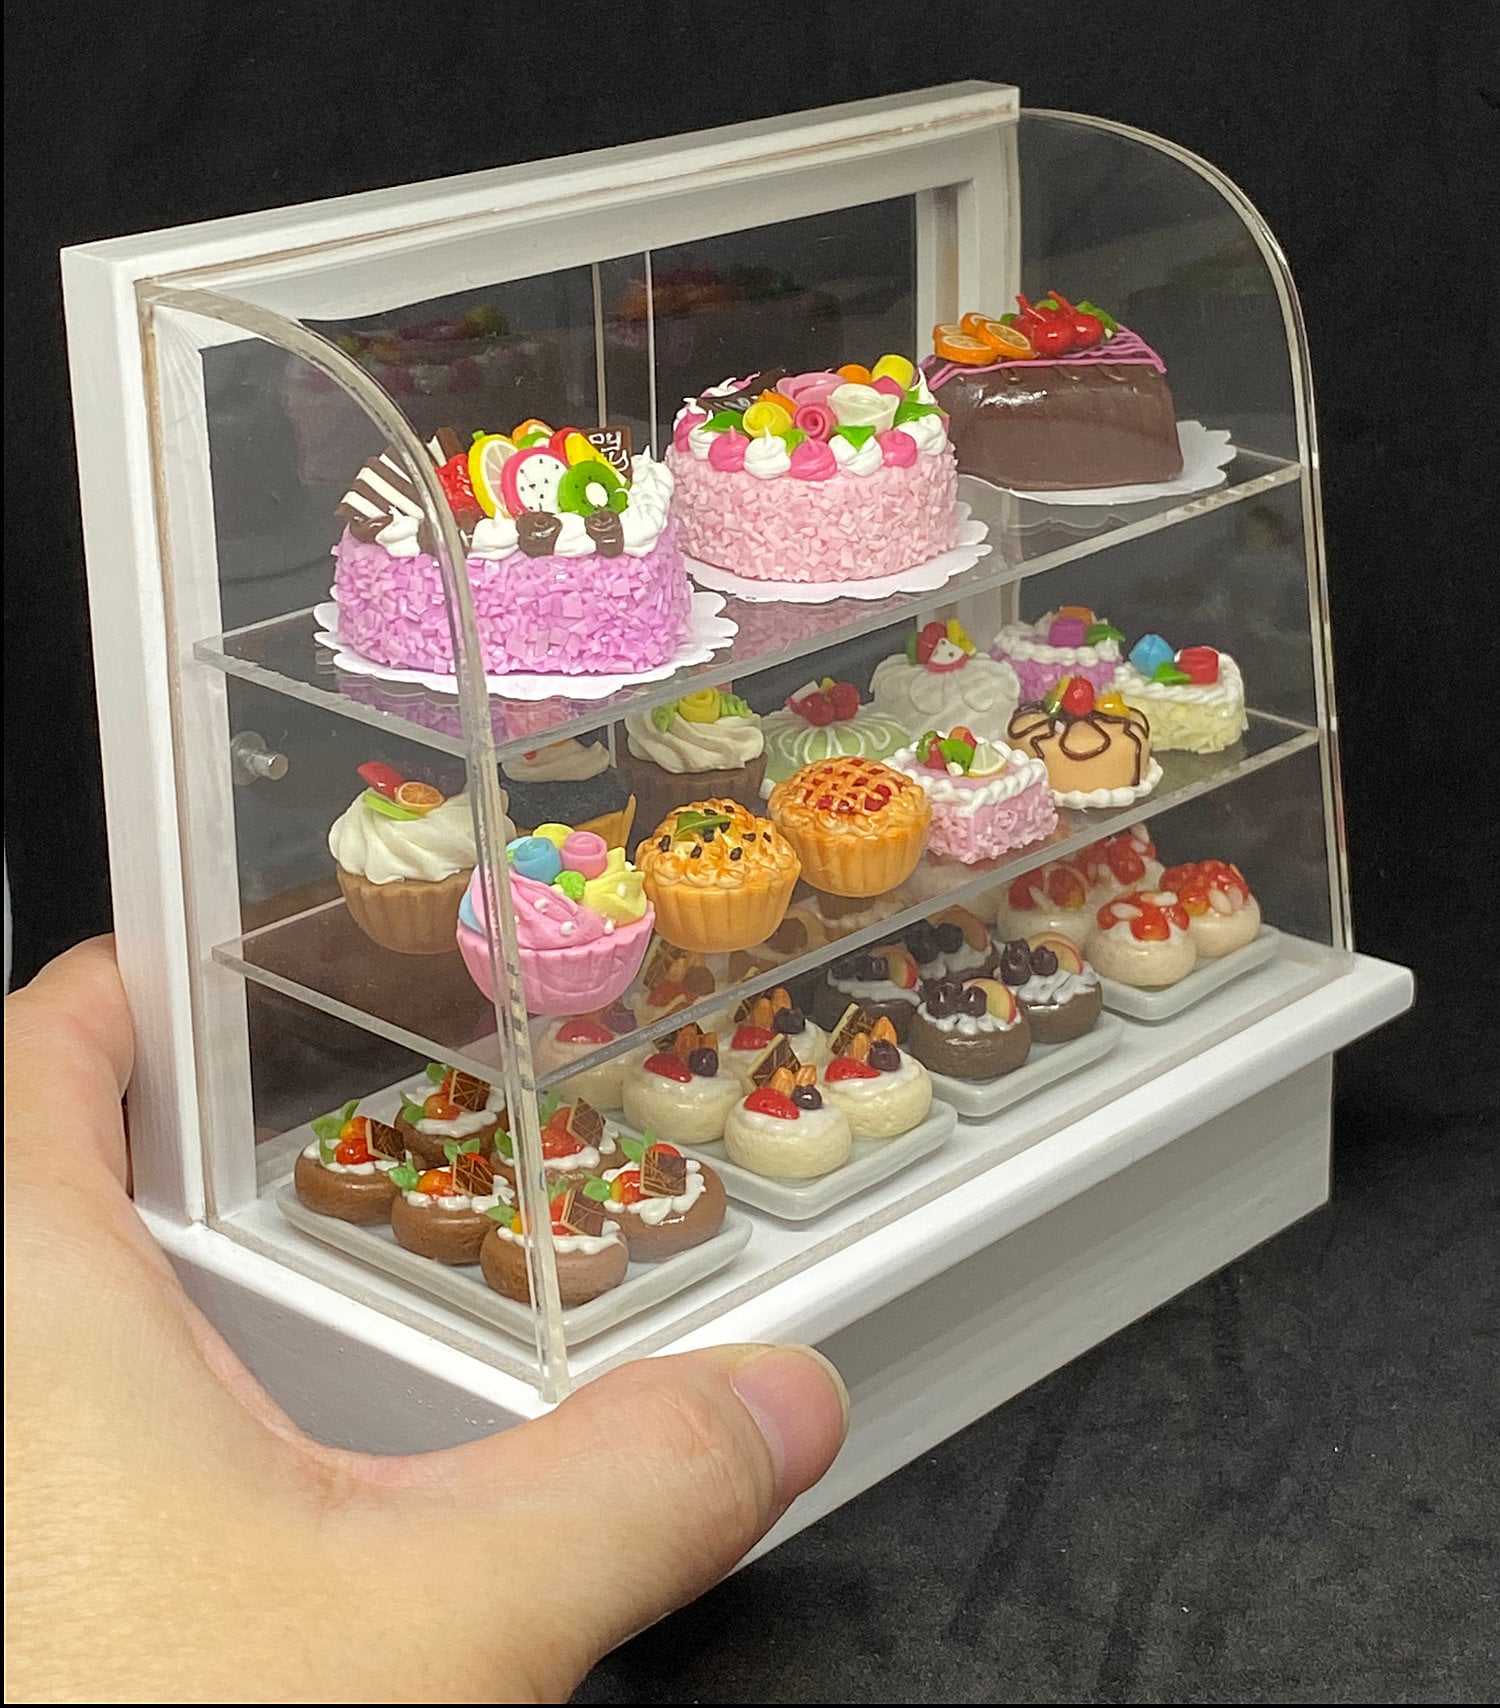 Flower Chocolate Mold Acrylic 2Pcs Set  Bake House – Bake House - The  Baking Treasure